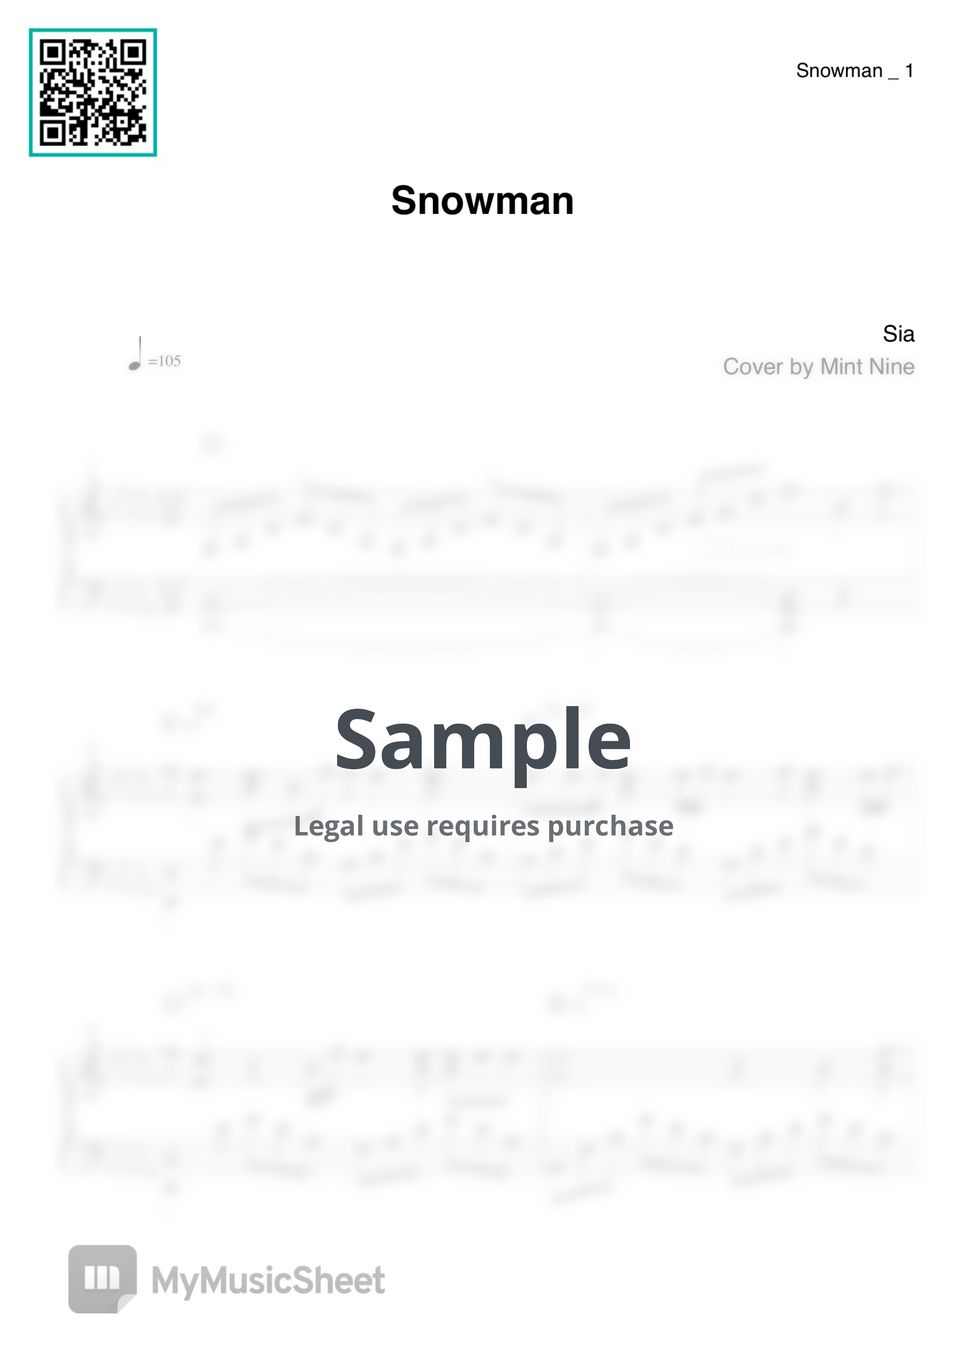 Sia - Snowman by Mint Nine